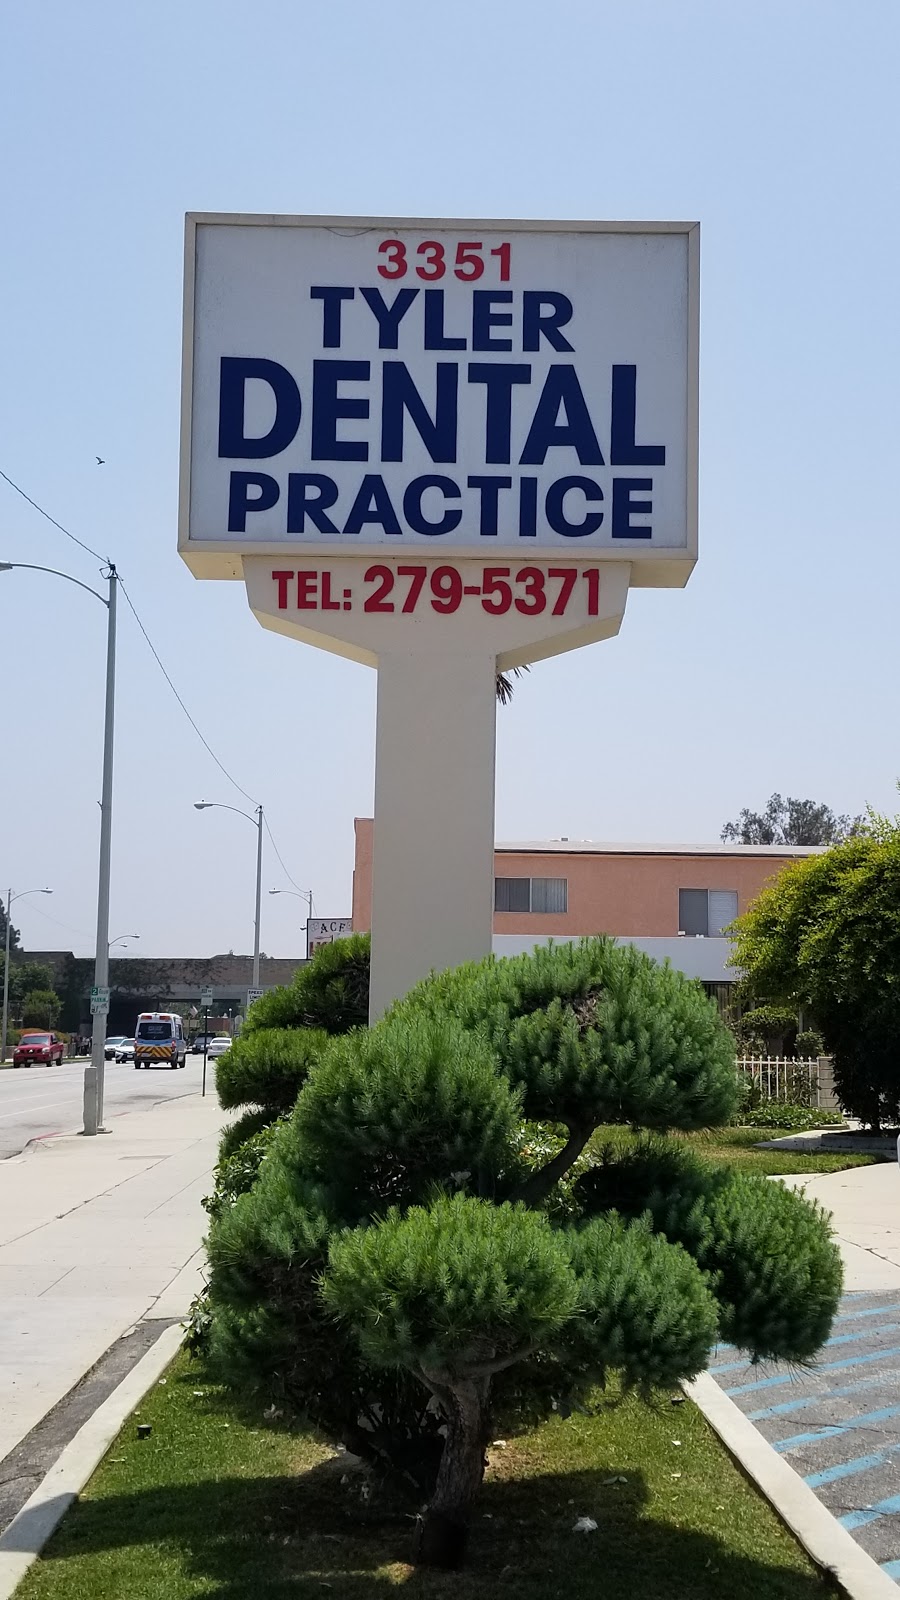 Tyler Dental Practice - dentist  | Photo 4 of 5 | Address: 3351 Tyler Ave, El Monte, CA 91731, USA | Phone: (626) 279-5371